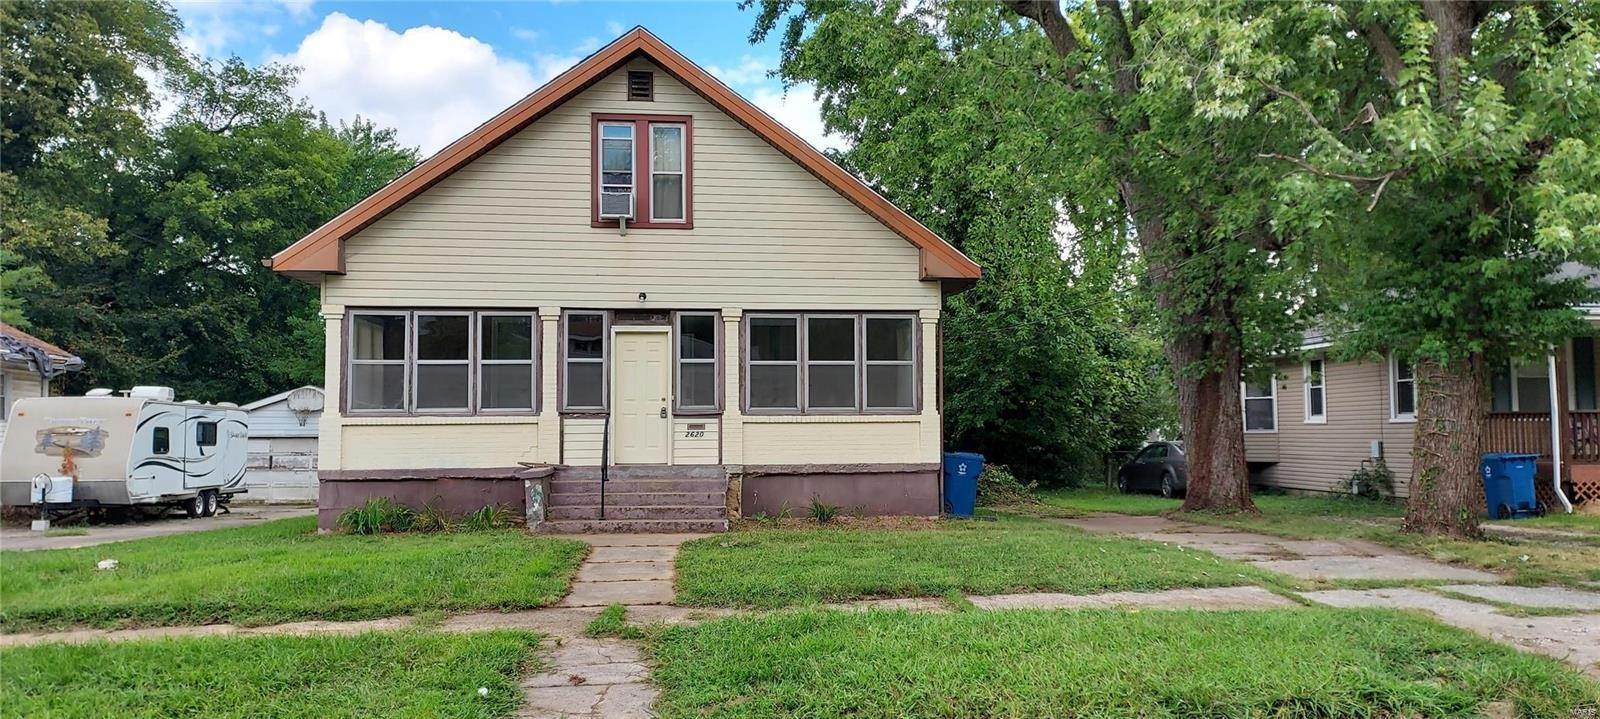 Property for Sale at 2620 Hillcrest Avenue Alton, Illinois 62002 United States